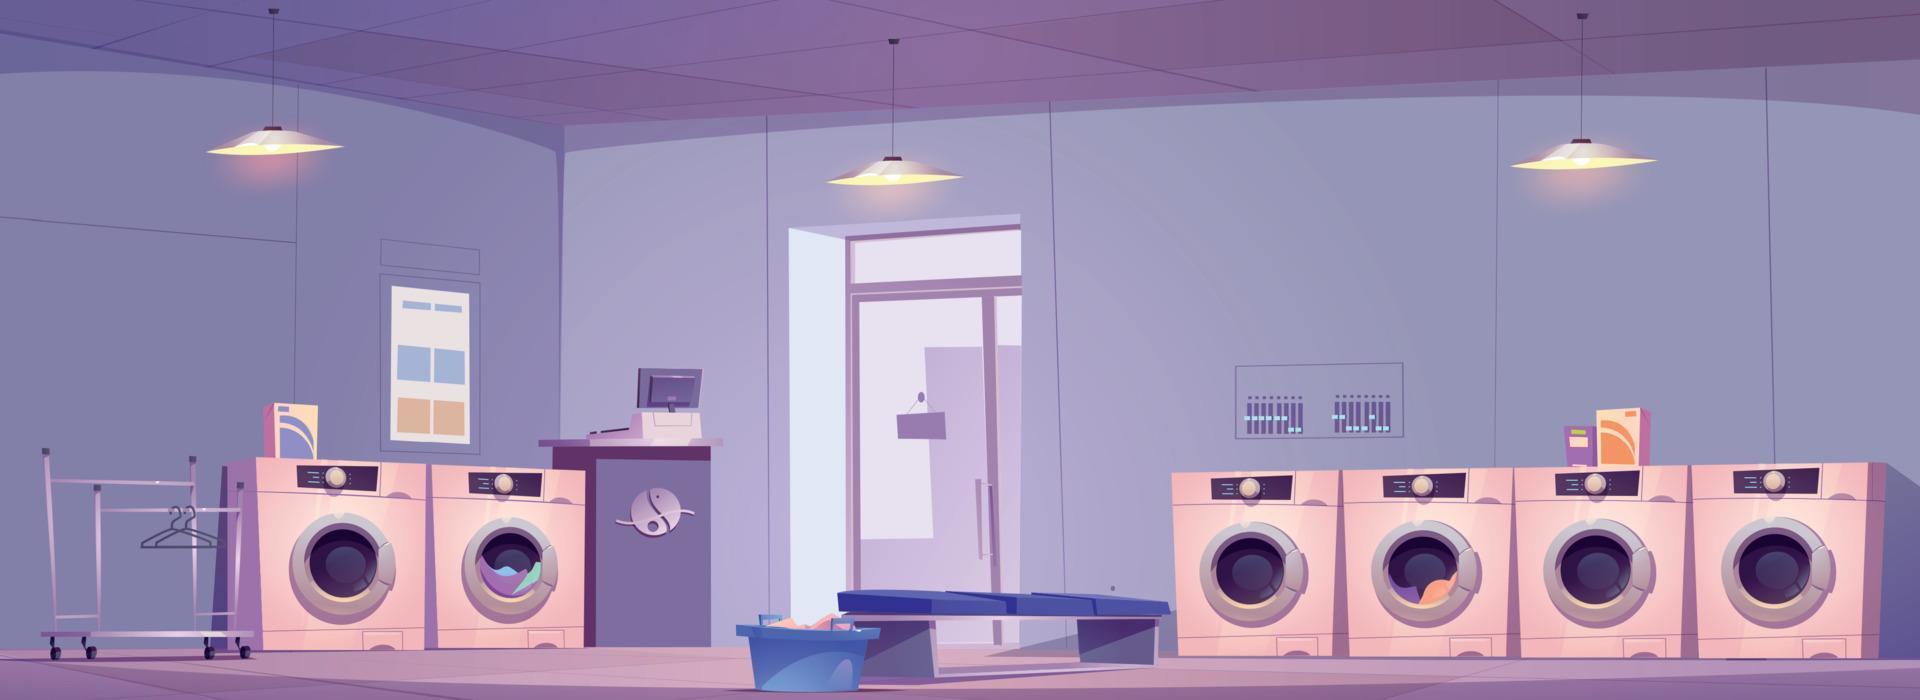 Public laundry room interior design vector